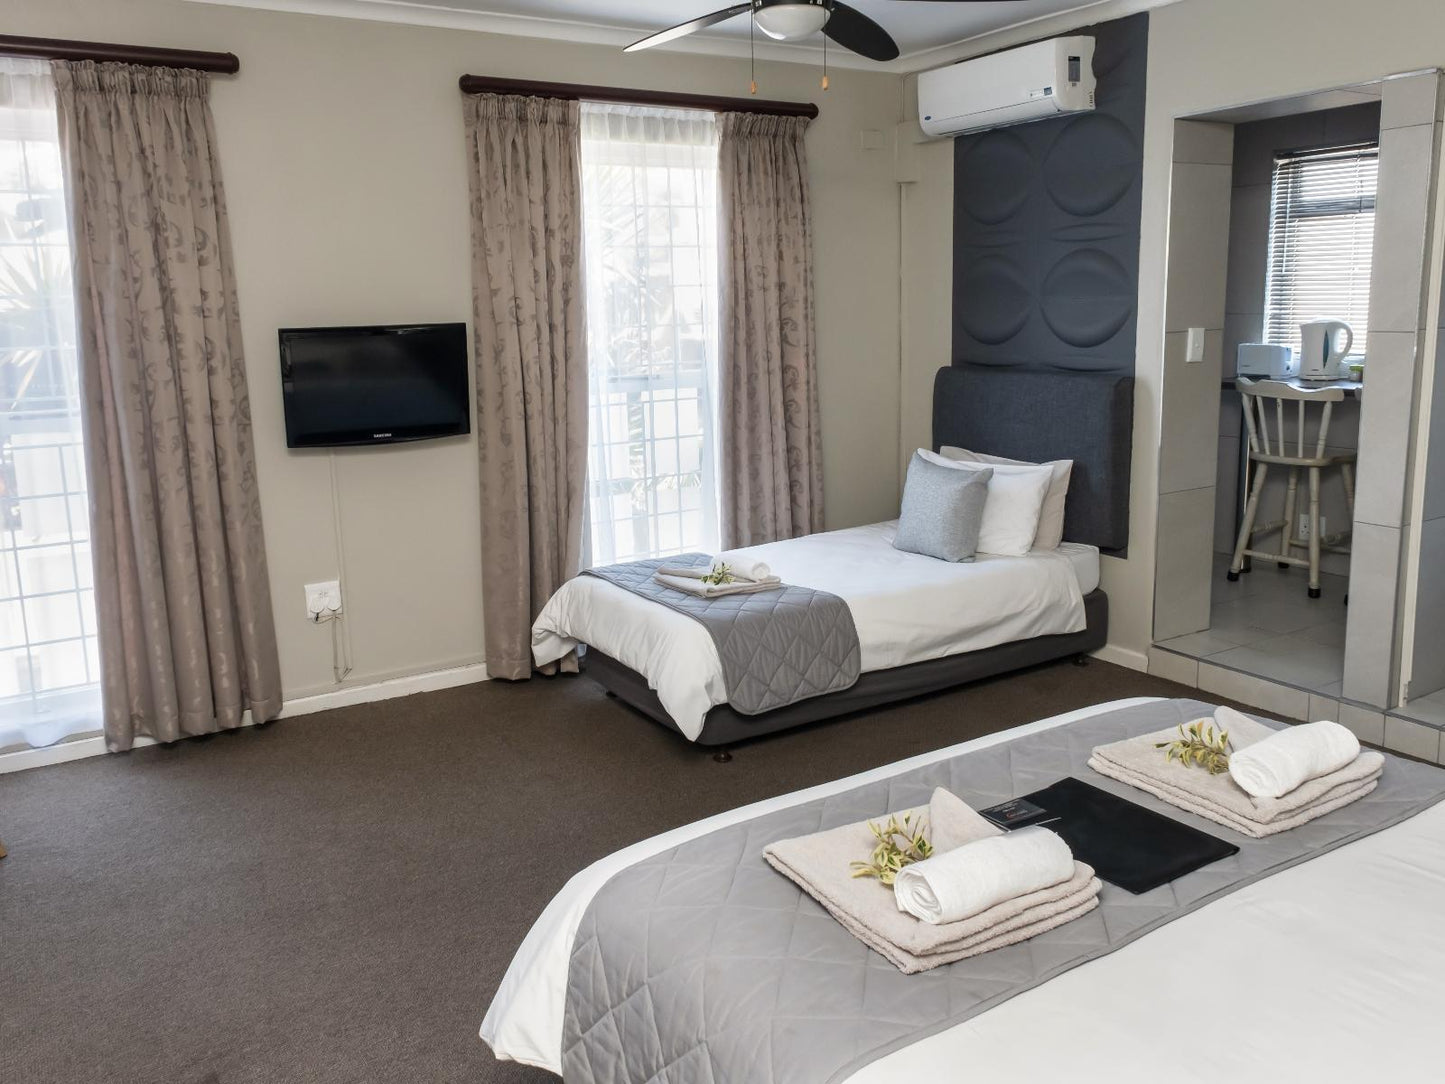 Standard Room 6 with kitchenette @ Plattekloof Premium Lodge